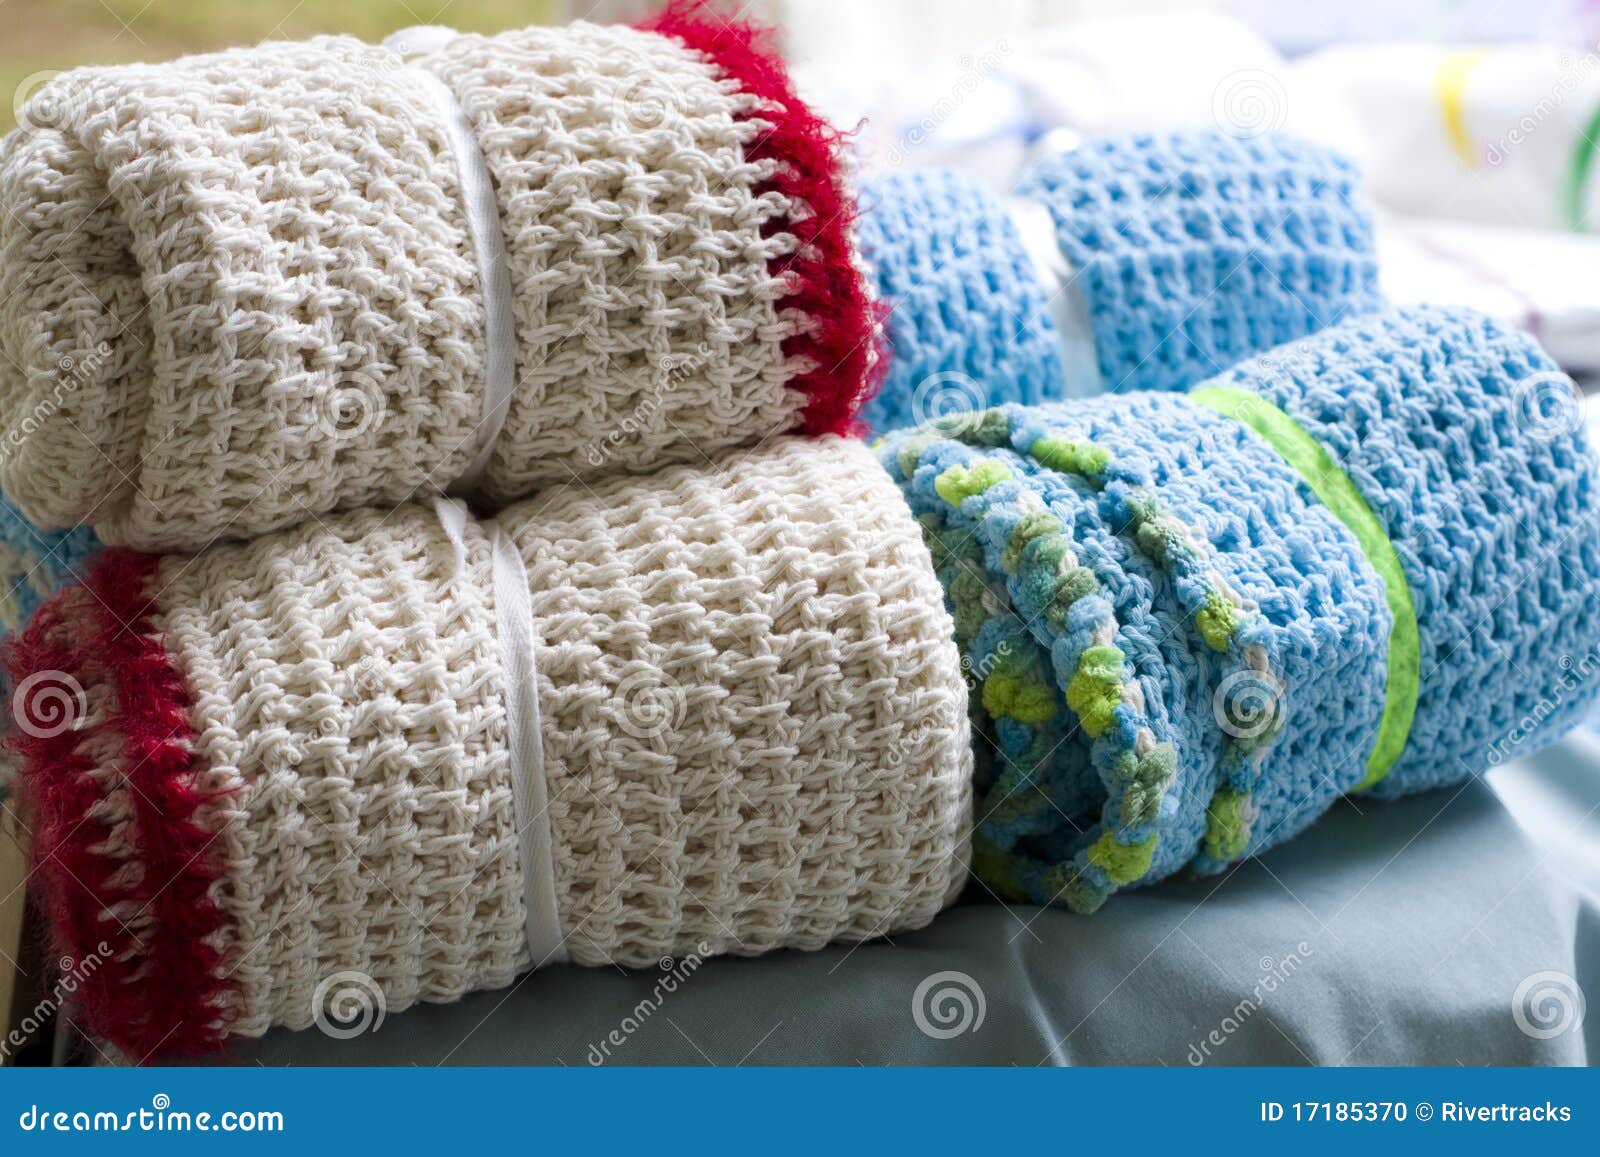 crocheted blanket wraps